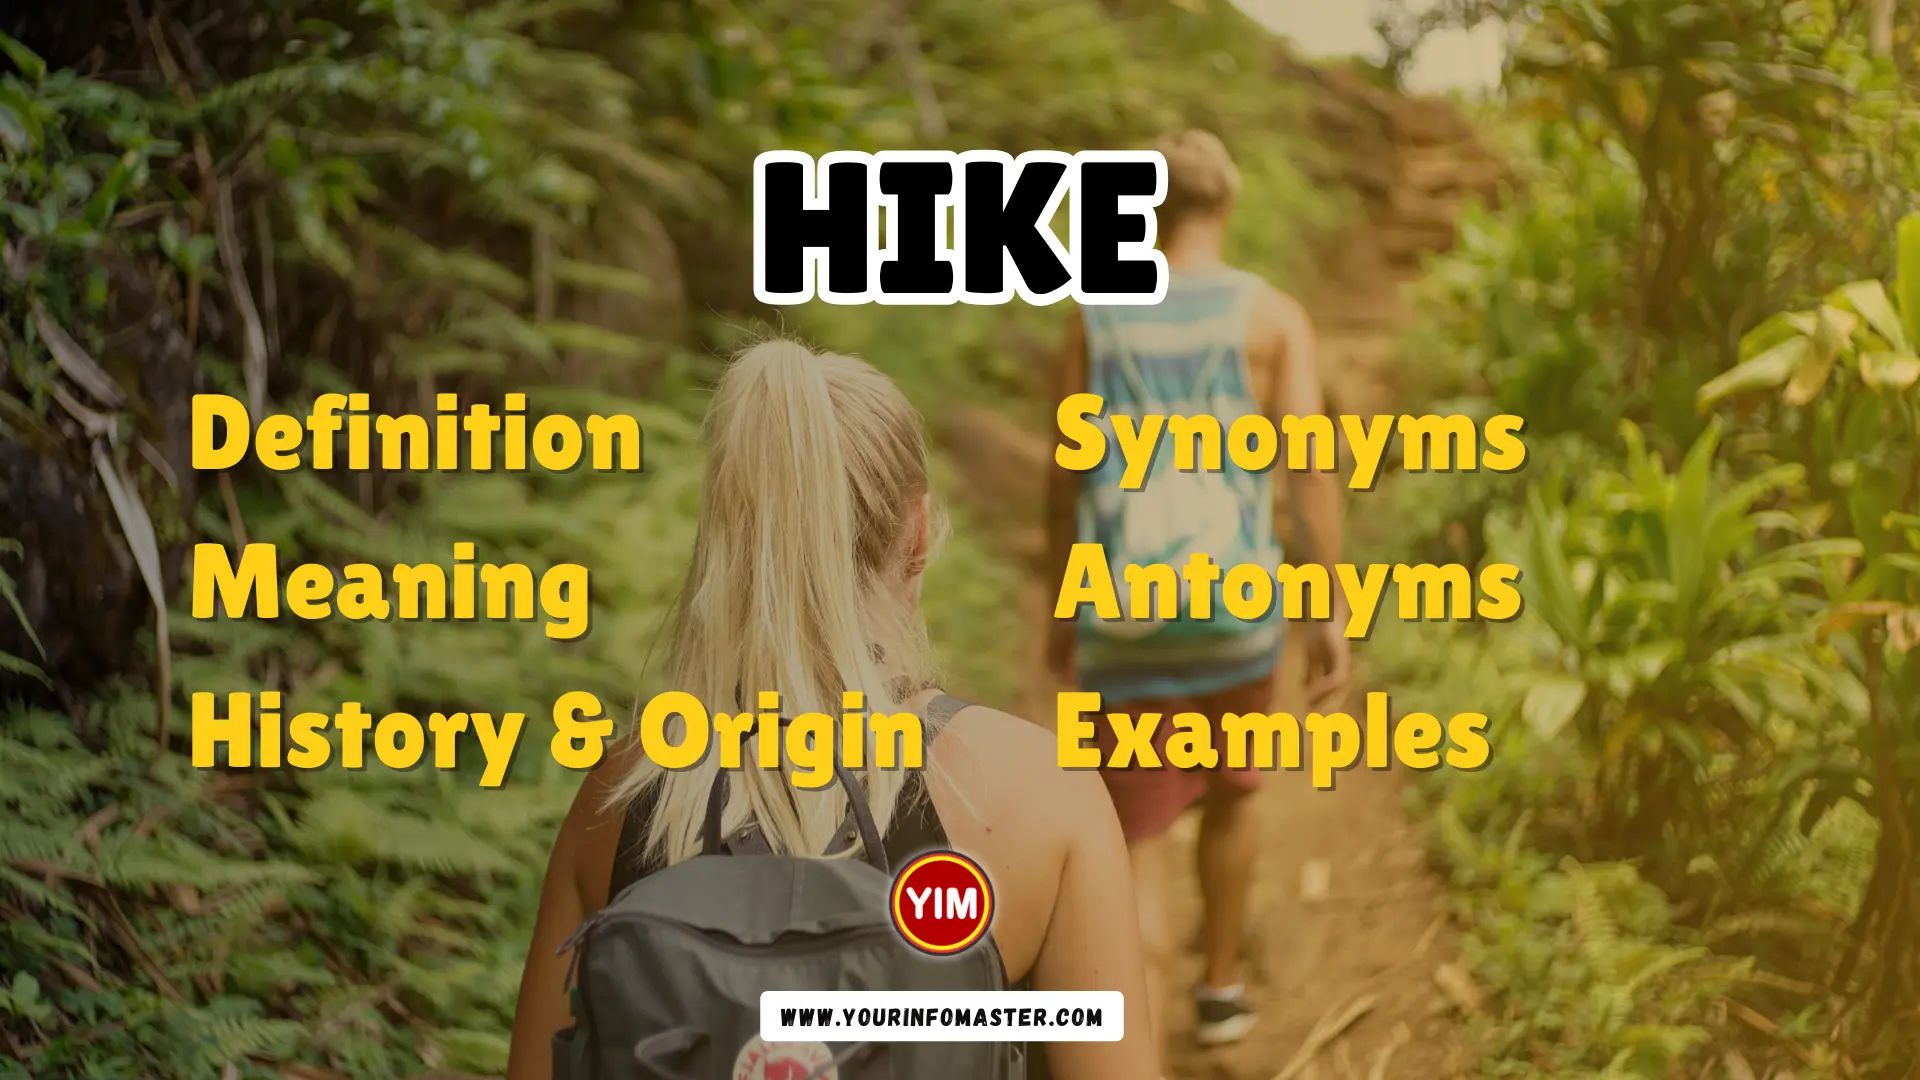 Hike Synonyms, Antonyms, Example Sentences